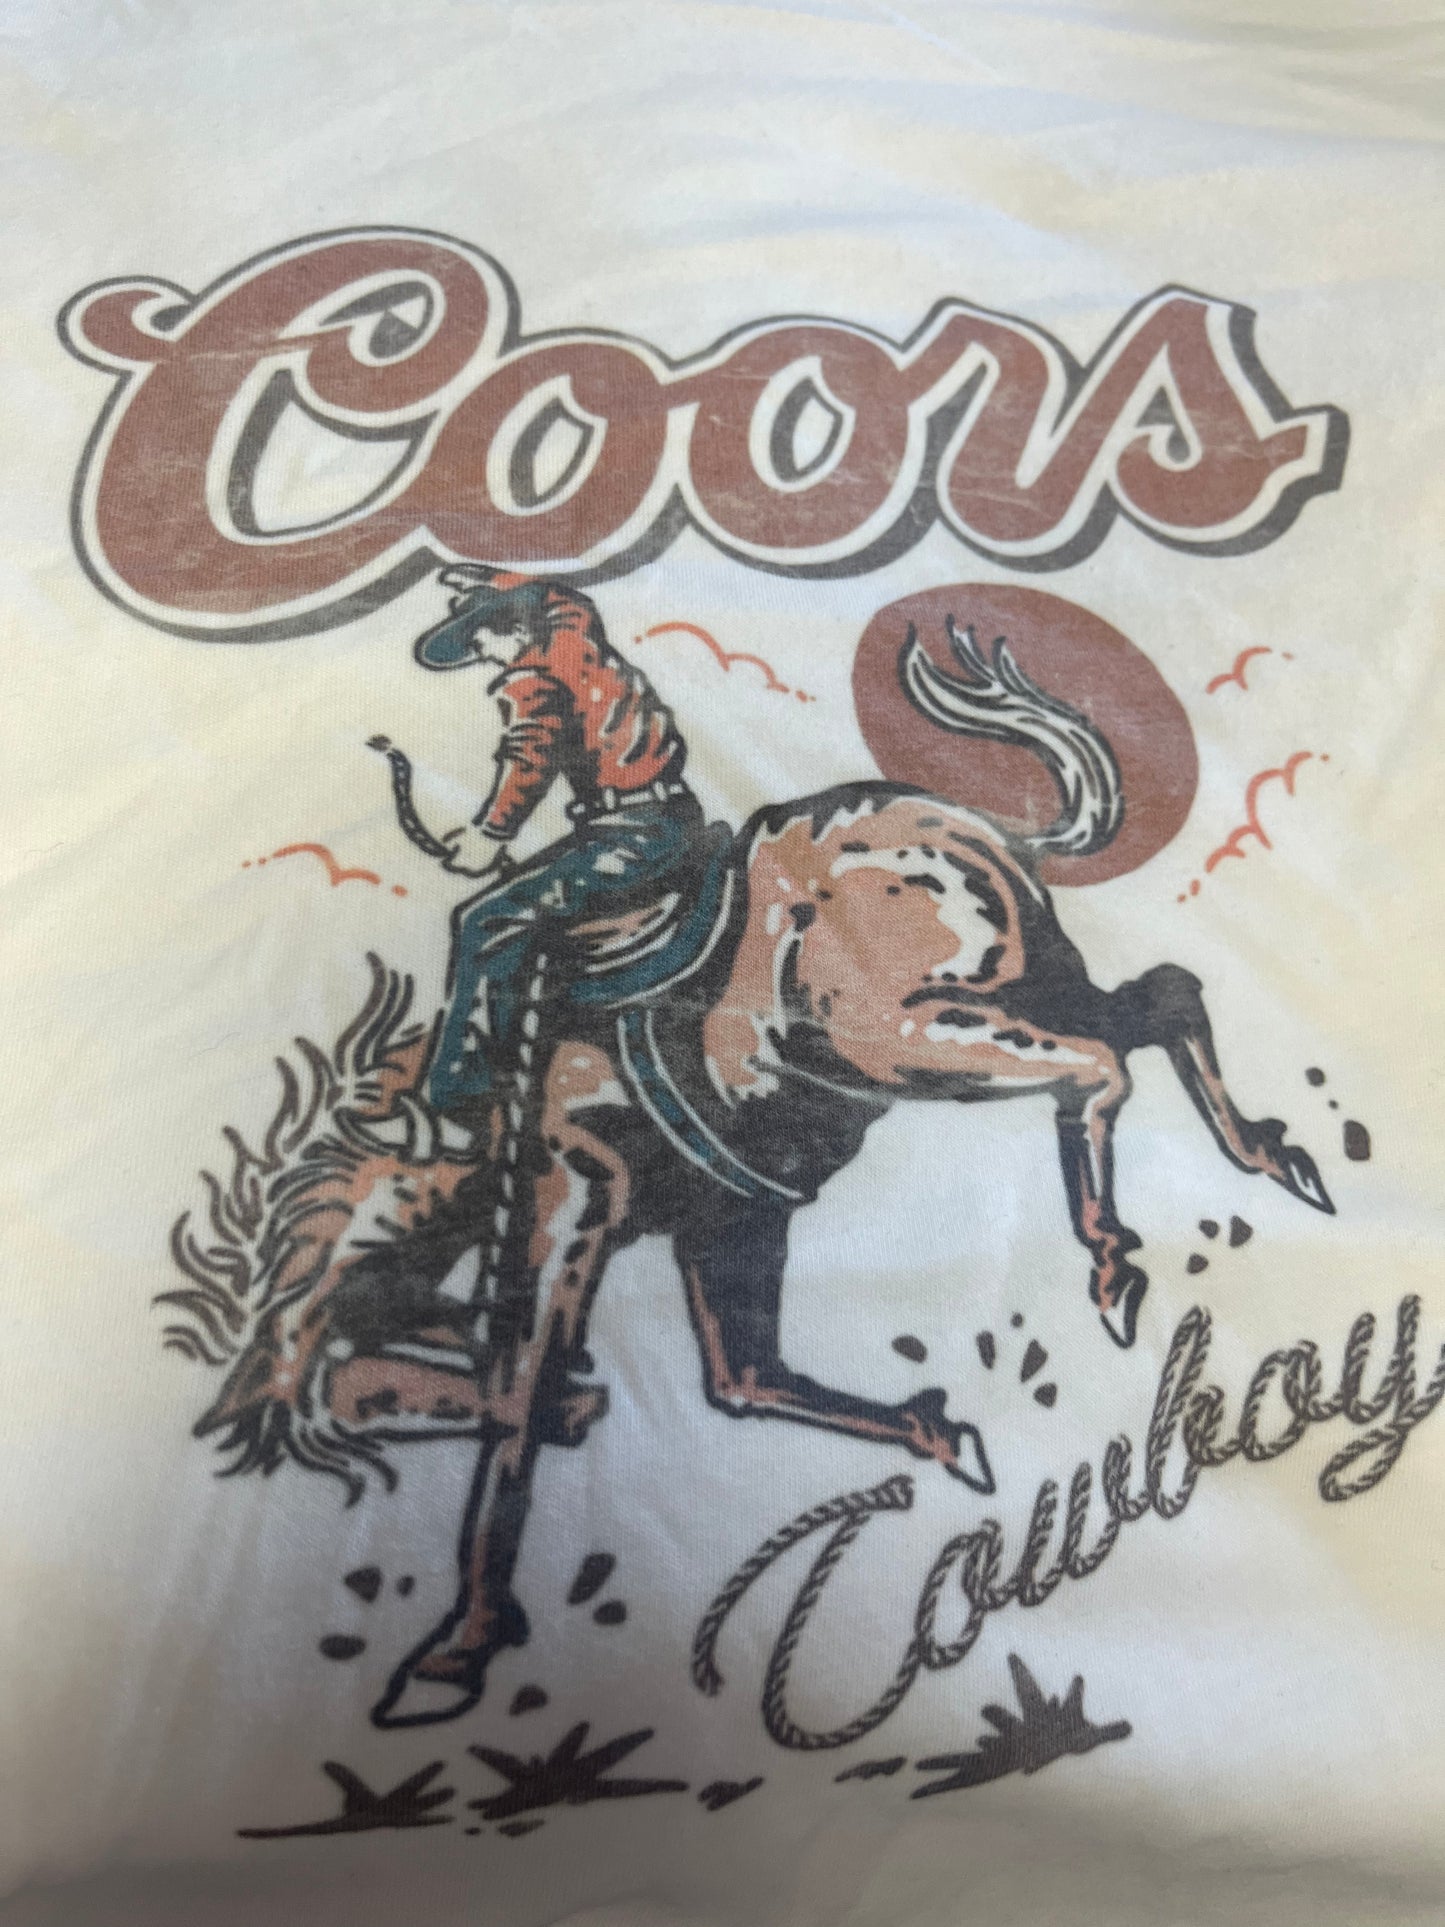 Coors Cowboy shirt